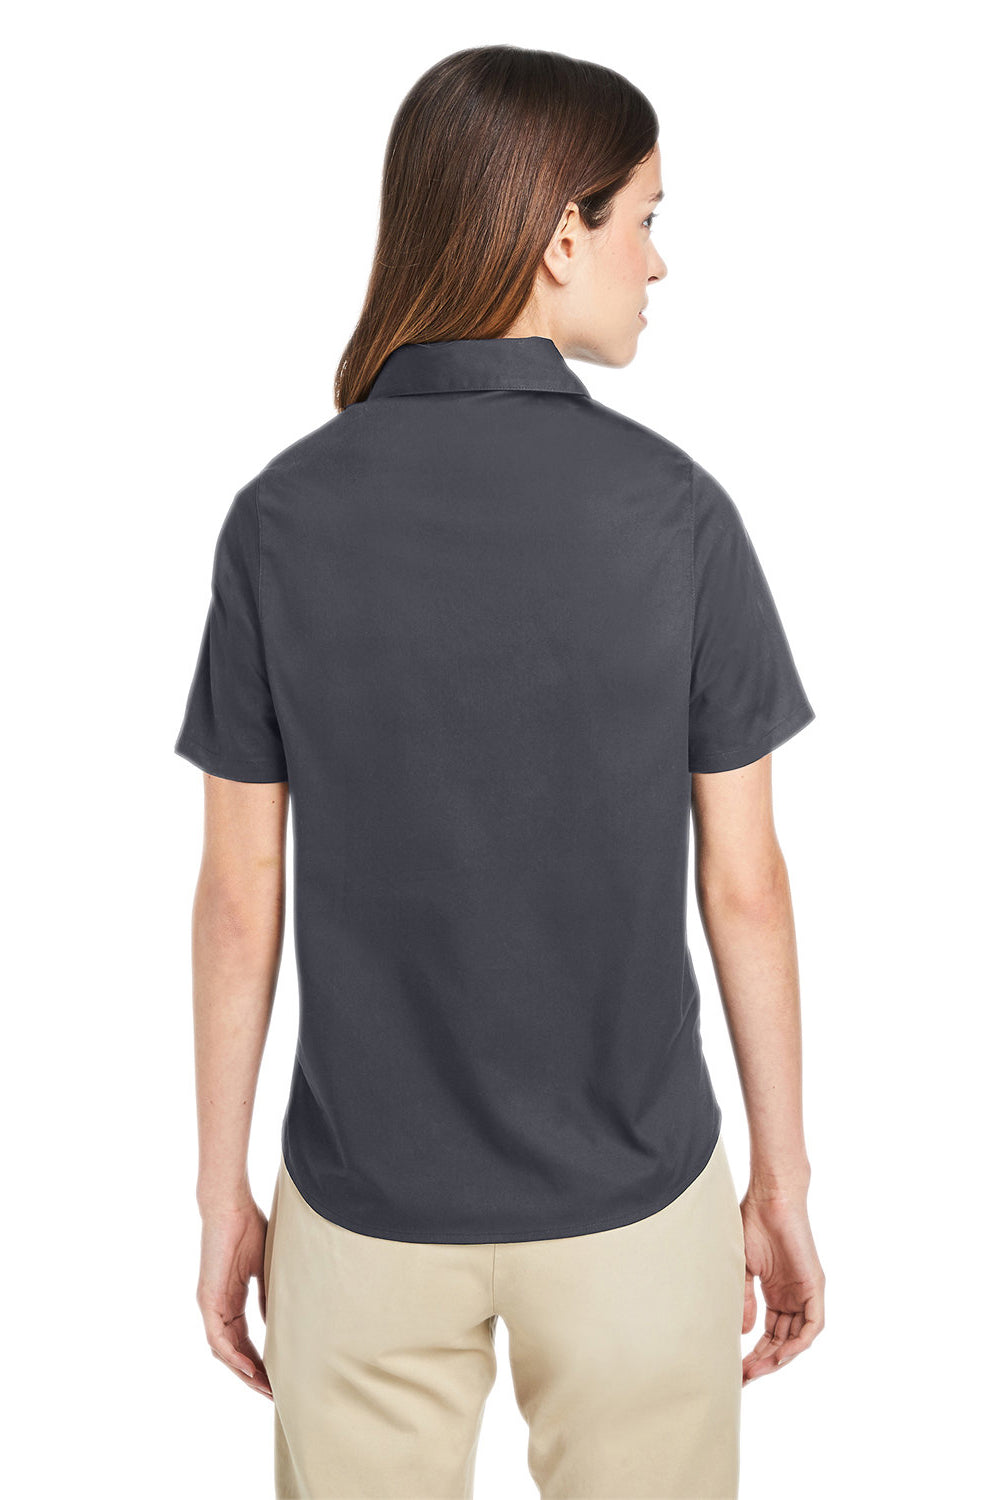 Harriton M585W Womens Advantage Short Sleeve Button Down Shirt w/ Double Pockets Dark Charcoal Grey Back